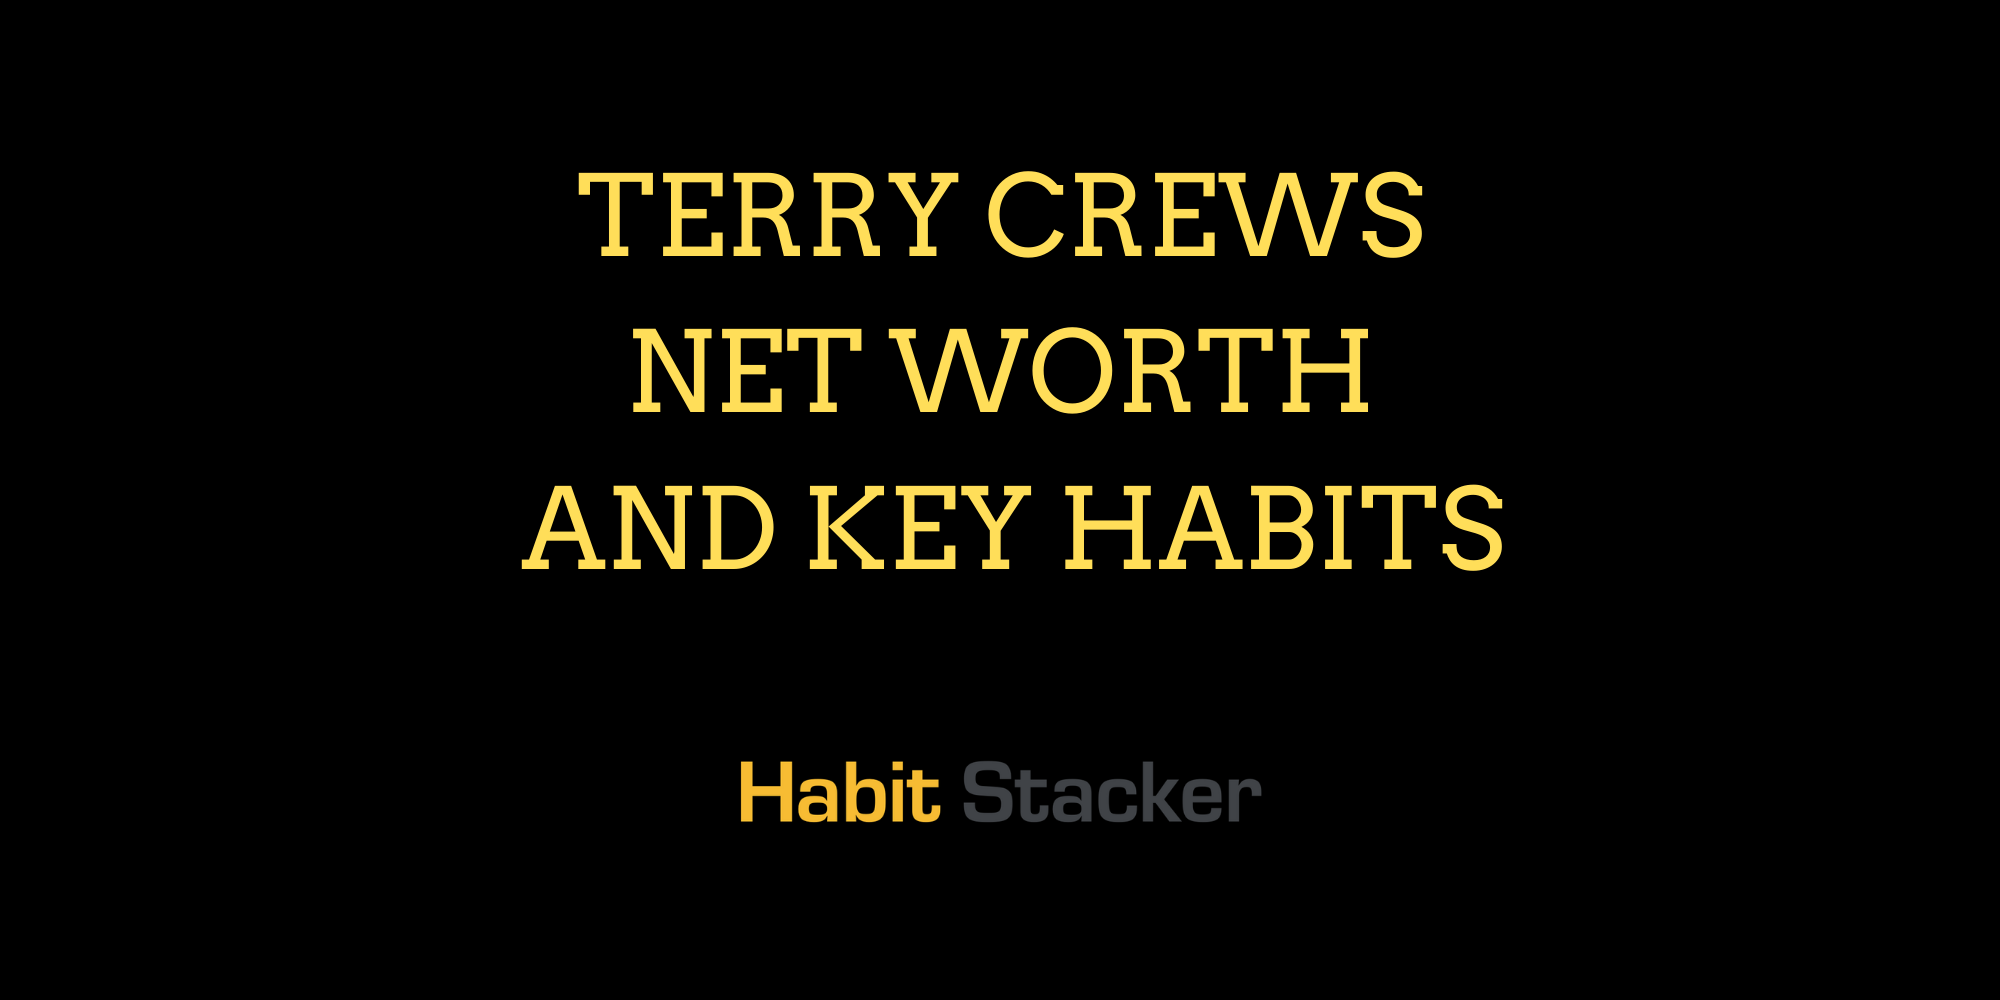 Terry Crews Net Worth and Key Habits